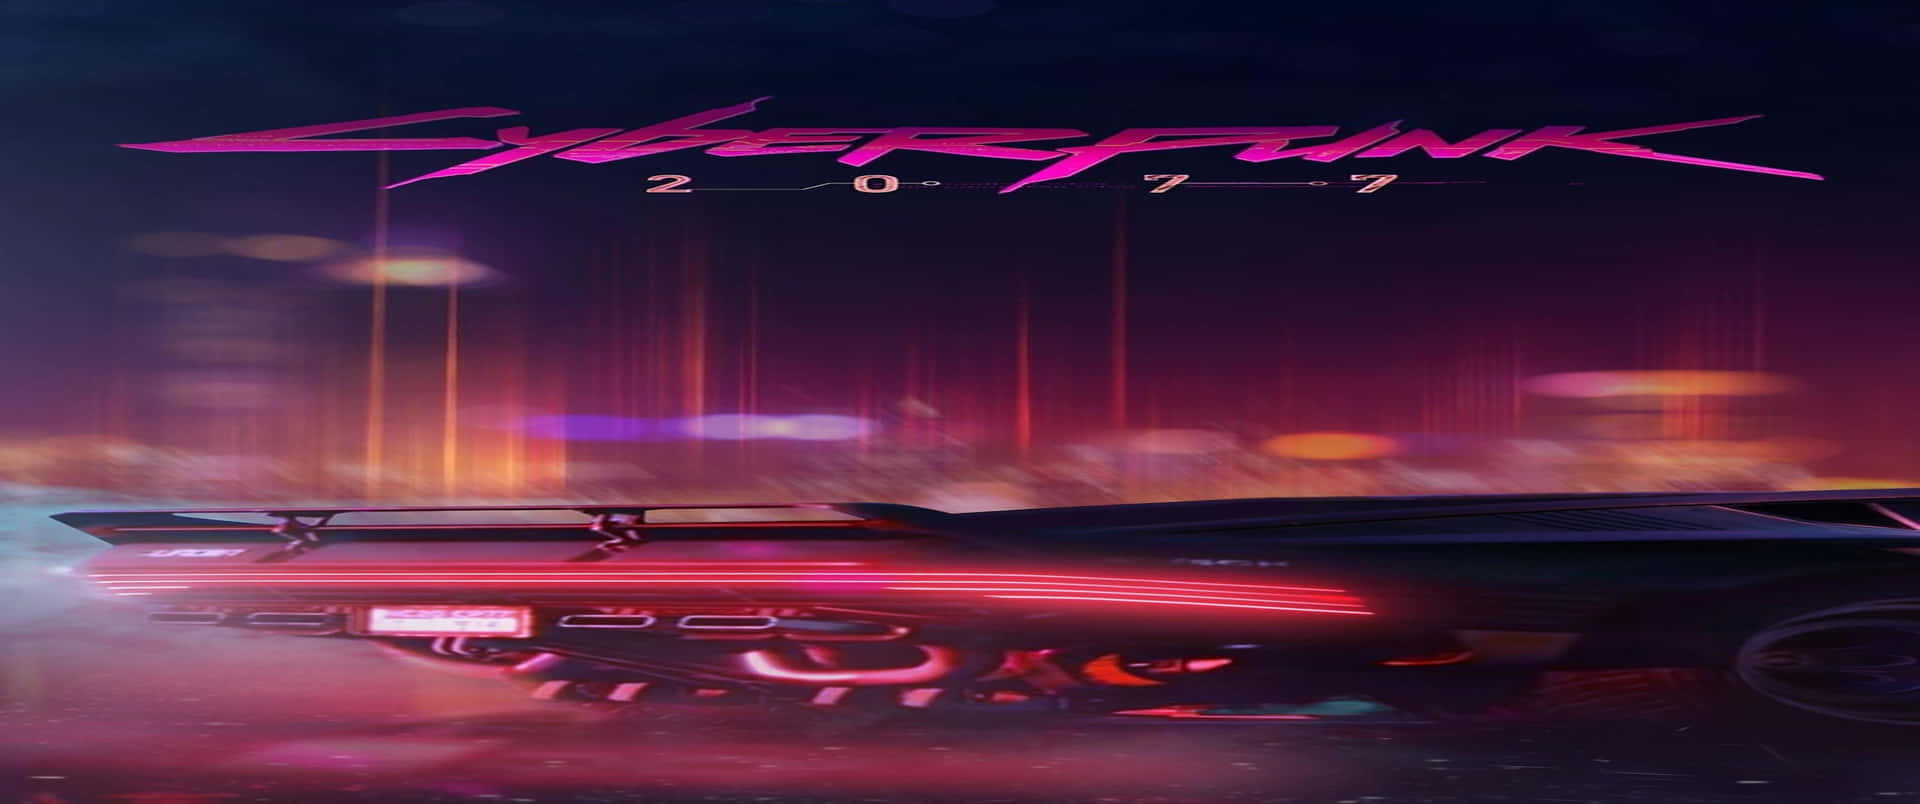 3440x1440p Cyberpunk 2077 Background Neon Lit Car Background